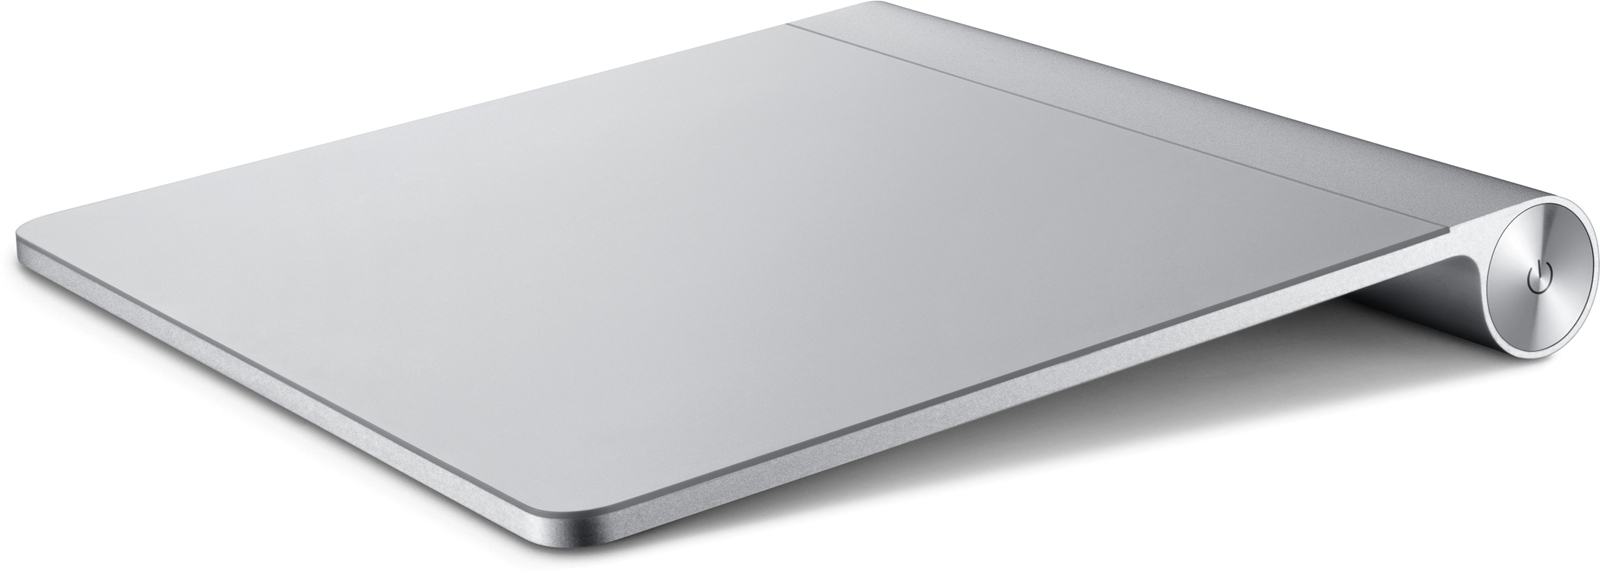 Magic Trackpad متاح الآن على متجر Apple عبر الإنترنت ؛ يأتي MacBooks Pro مع علبة هدايا